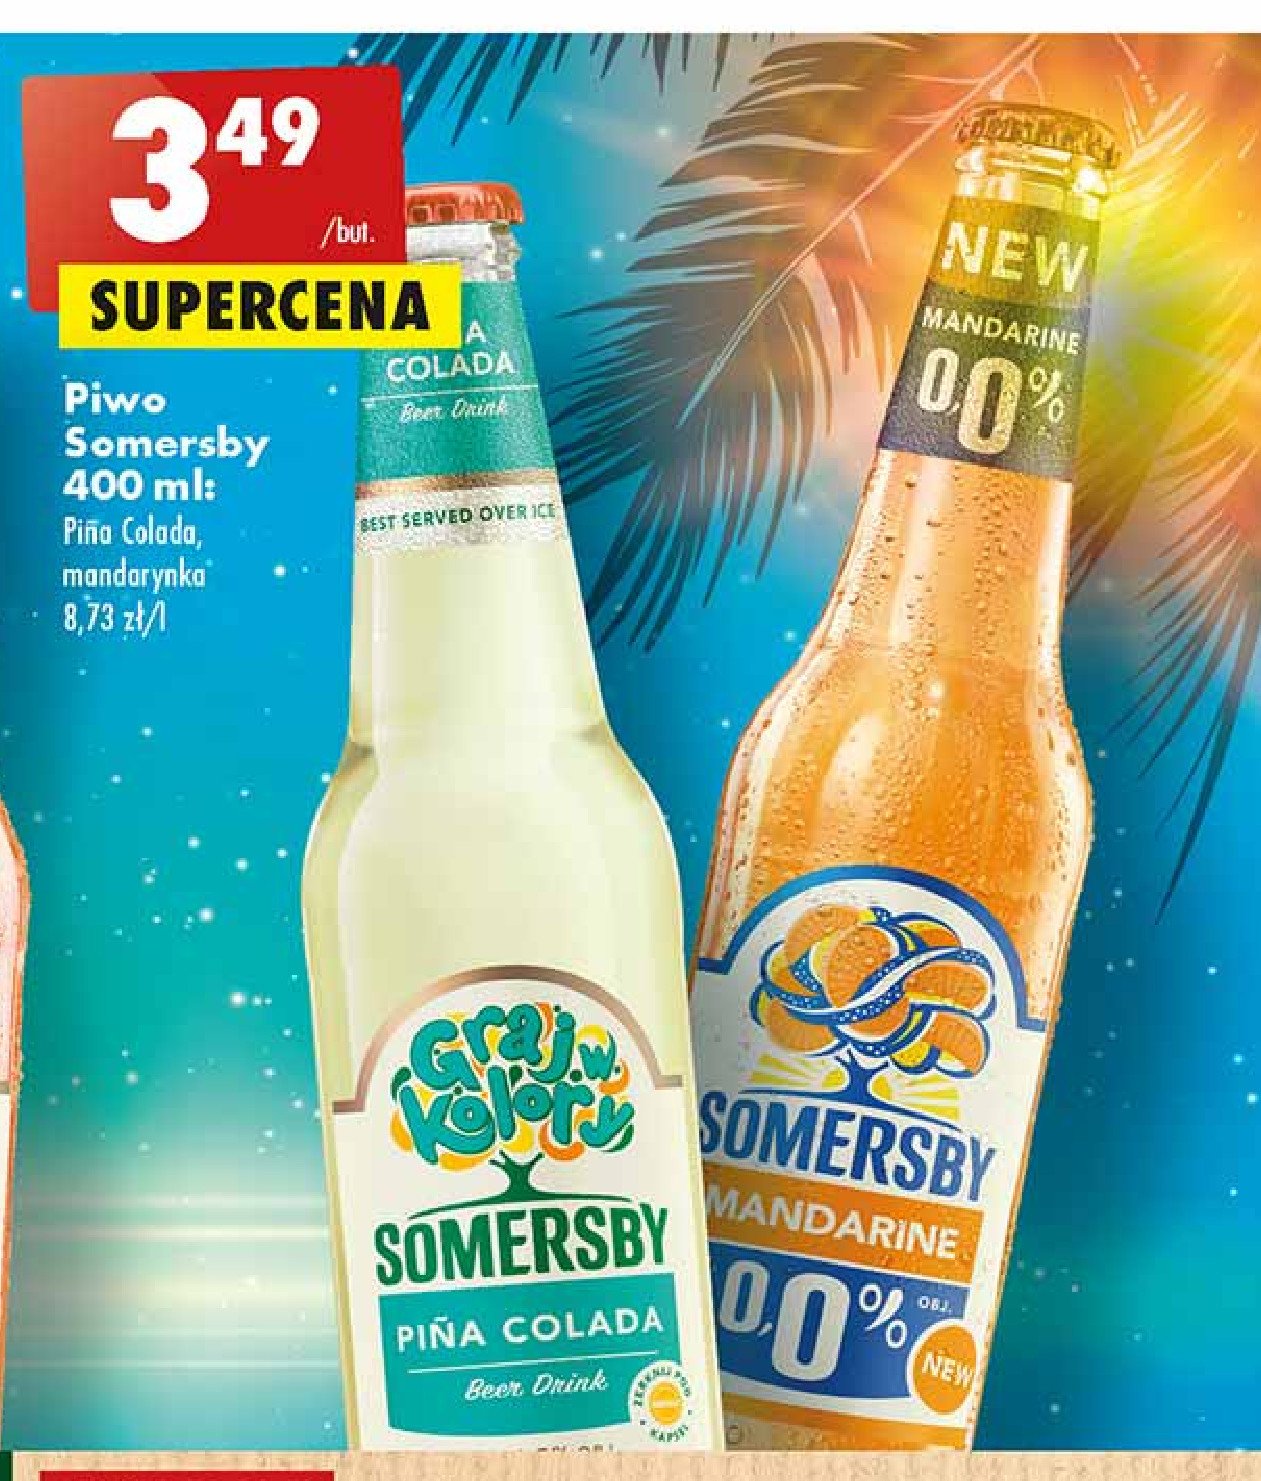 Piwo Somersby mandarine 0.0% promocje